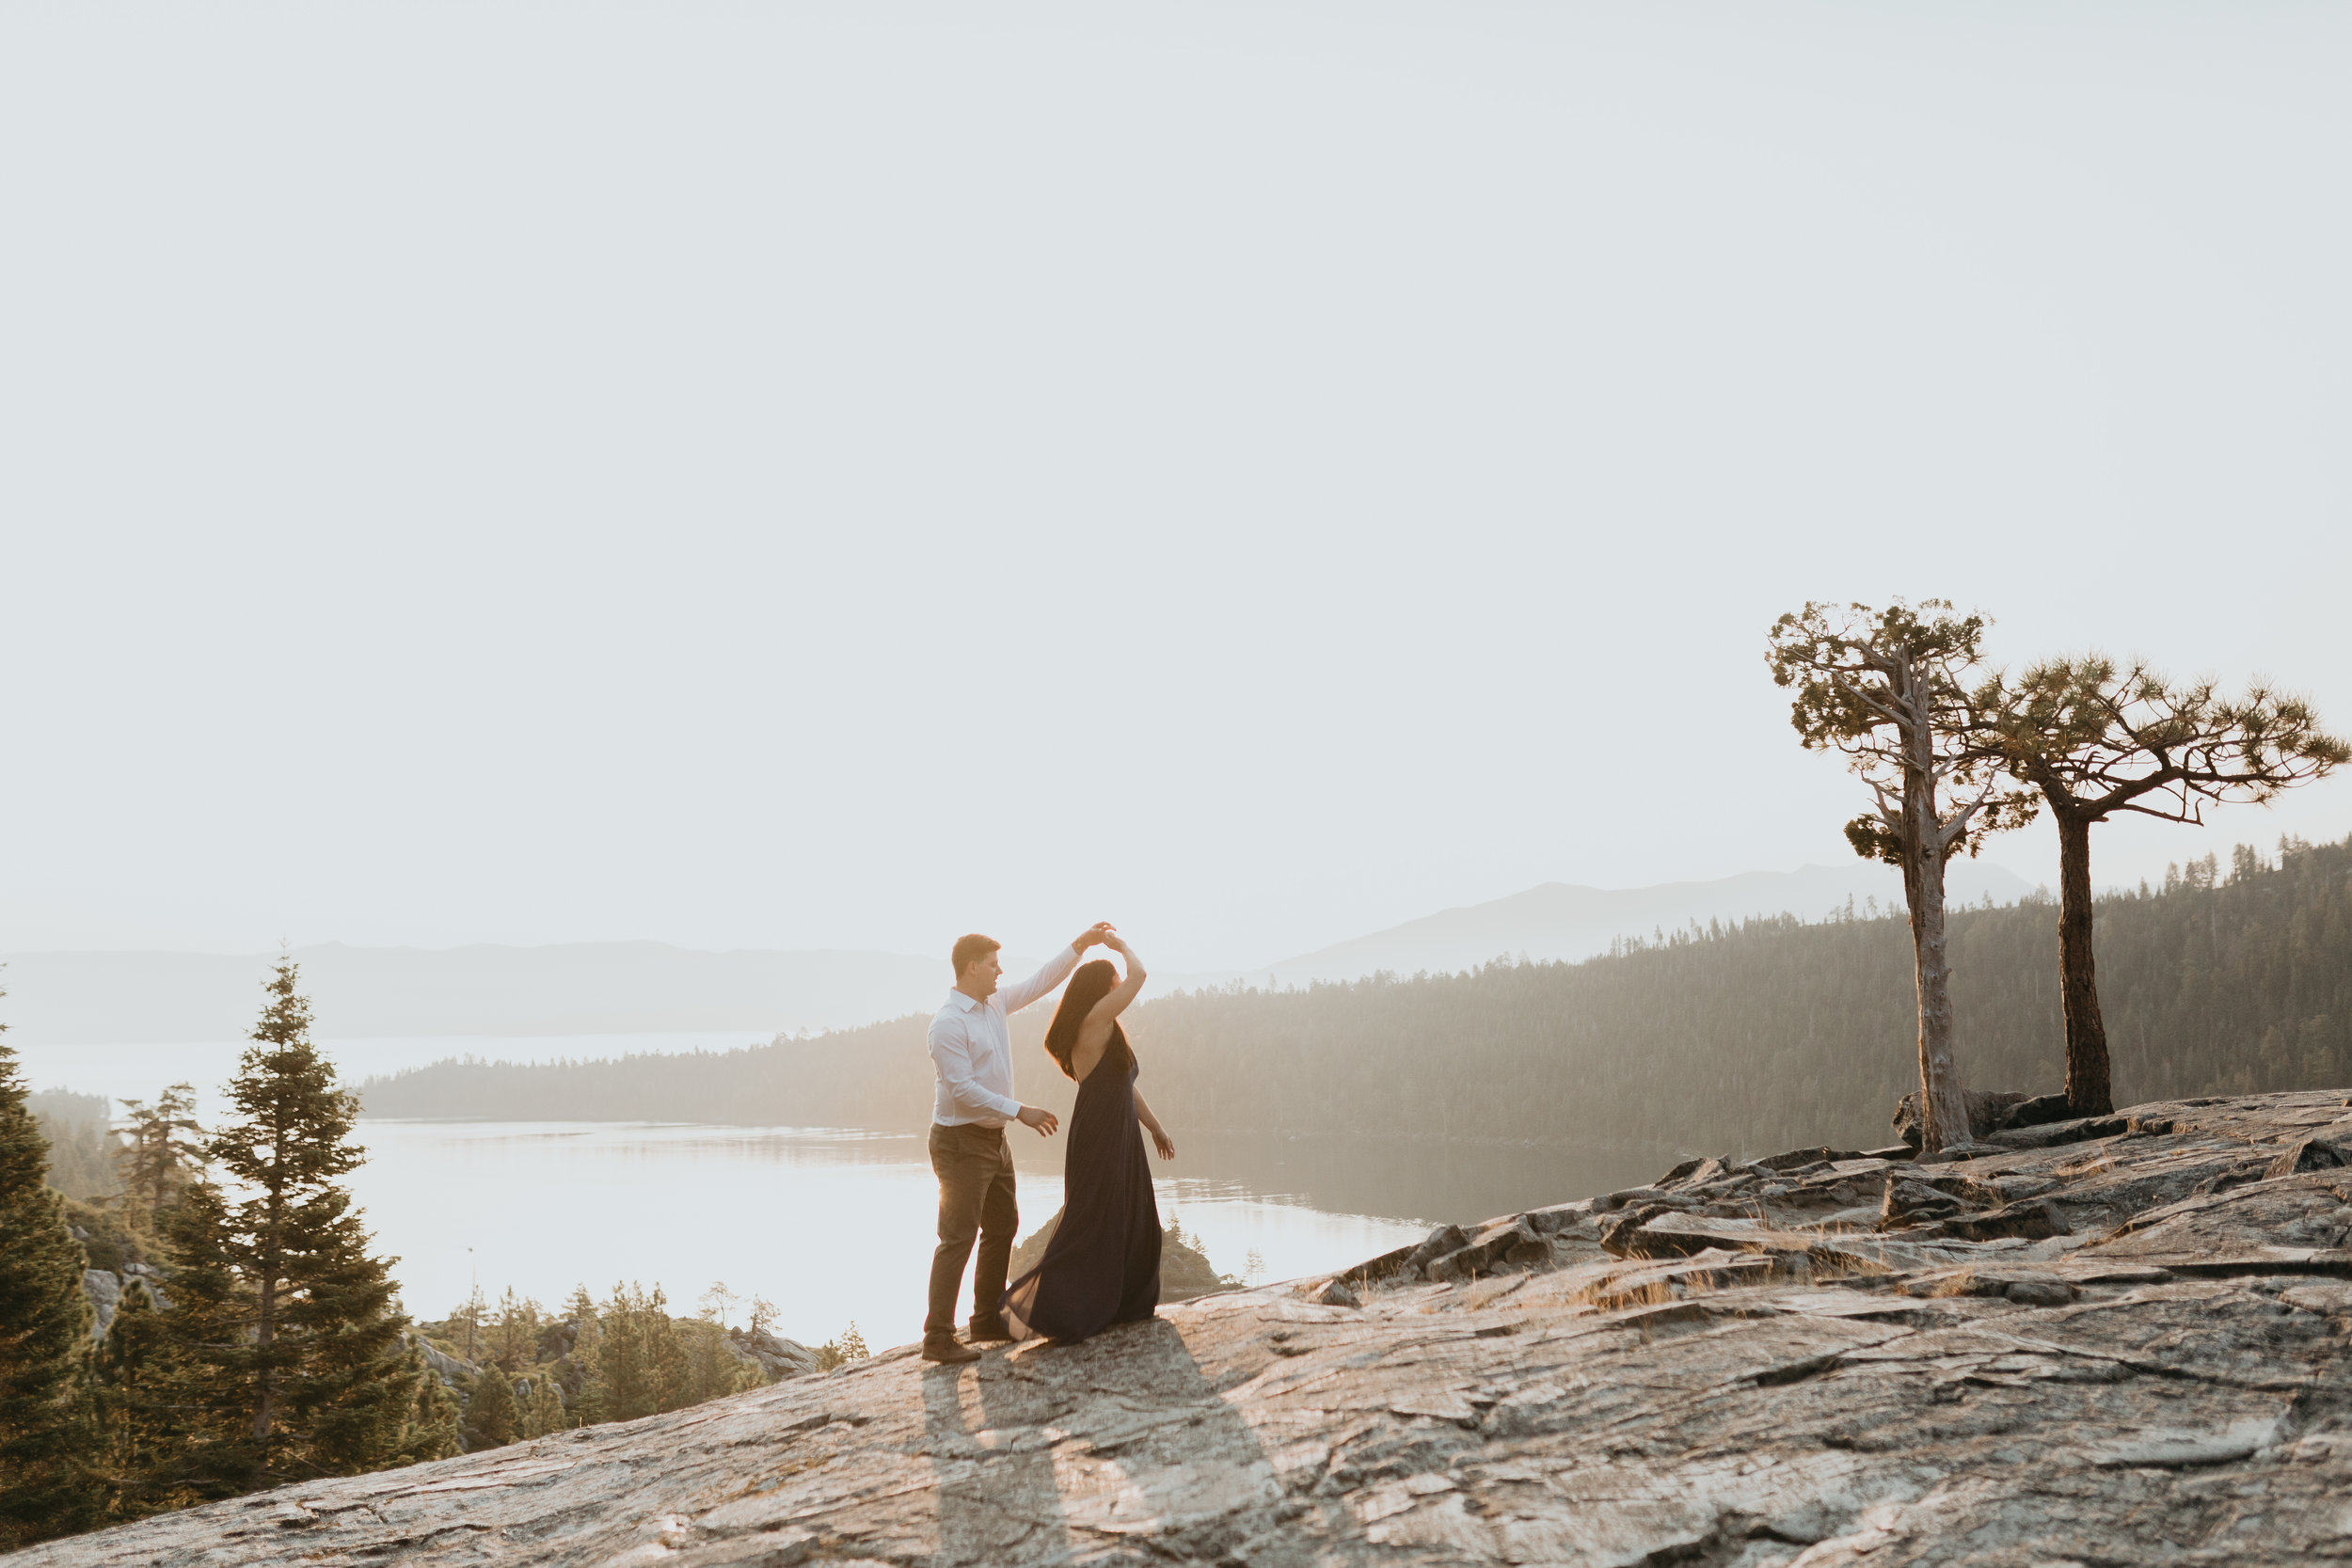 nicole-daacke-photography-lake-tahoe-sunrise-summer-adventure-engagement-photos-nevada-wedding-elopement-photographer-golden-emerald-bay-light-pine-trees-summer-vibe-fun-carefree-authentic-love-33.jpg